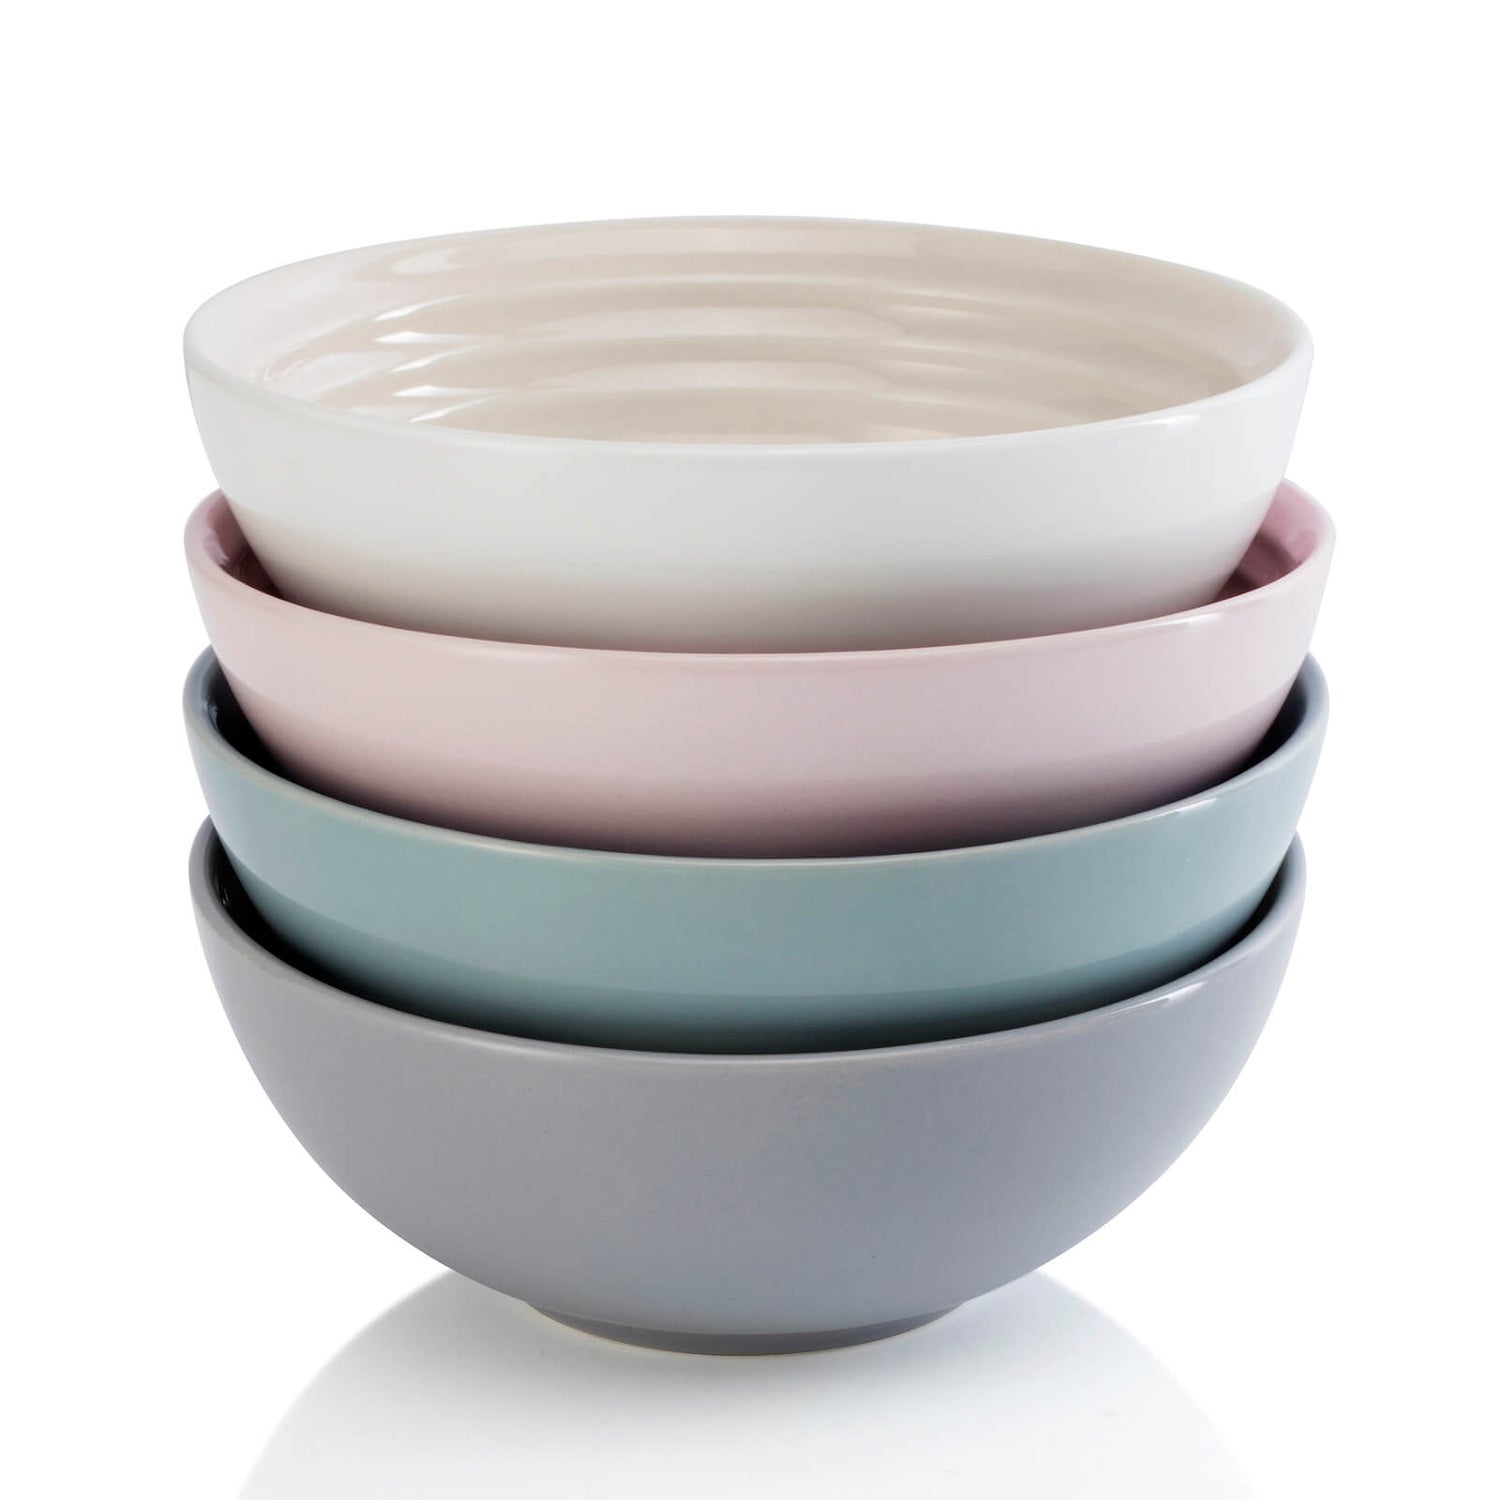 Le Creuset Stoneware Calm Collection Cereal Bowls (Set of 4) | TheHut.com